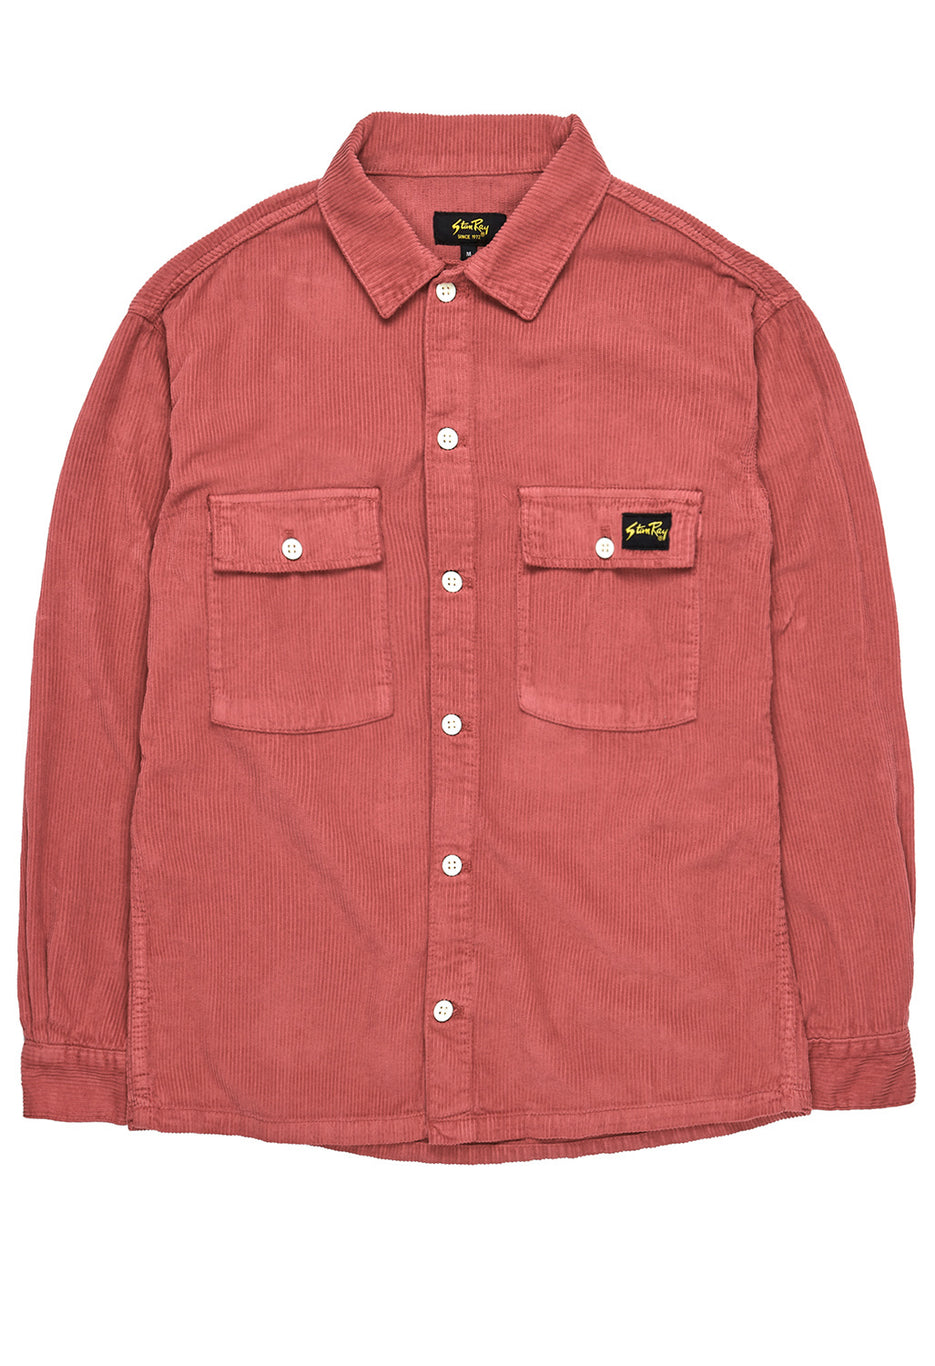 Stan Ray Men's CPO Shirt - Cranberry Cord